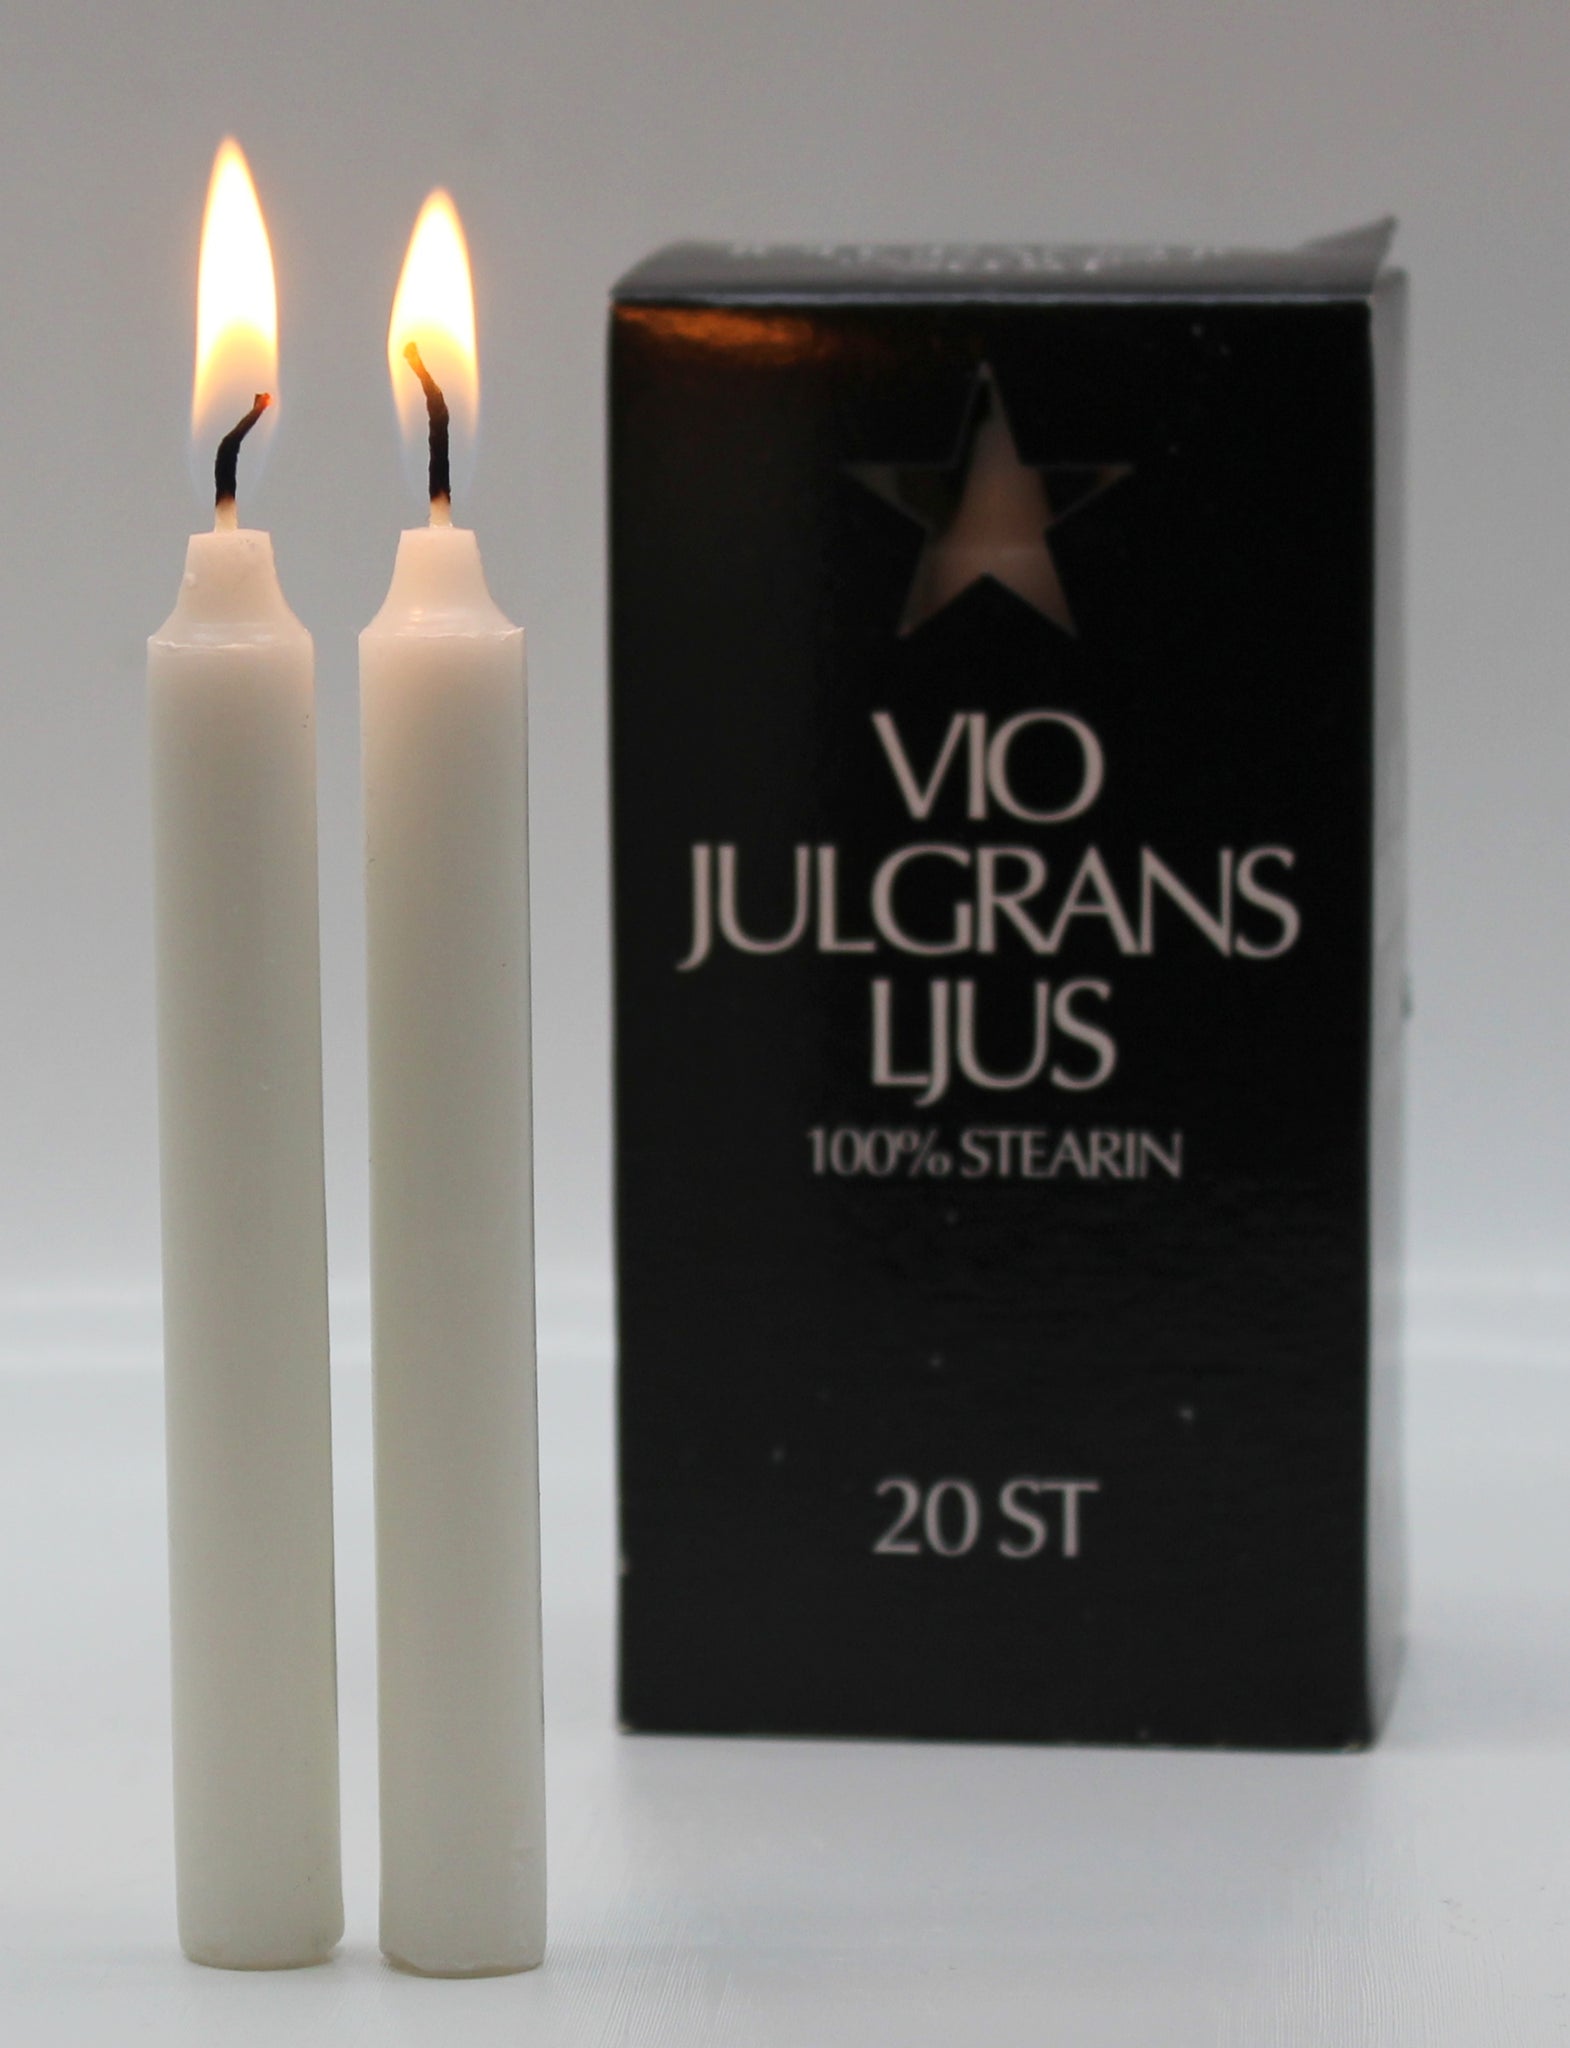 Julgransljus - Christmas Tree Candles